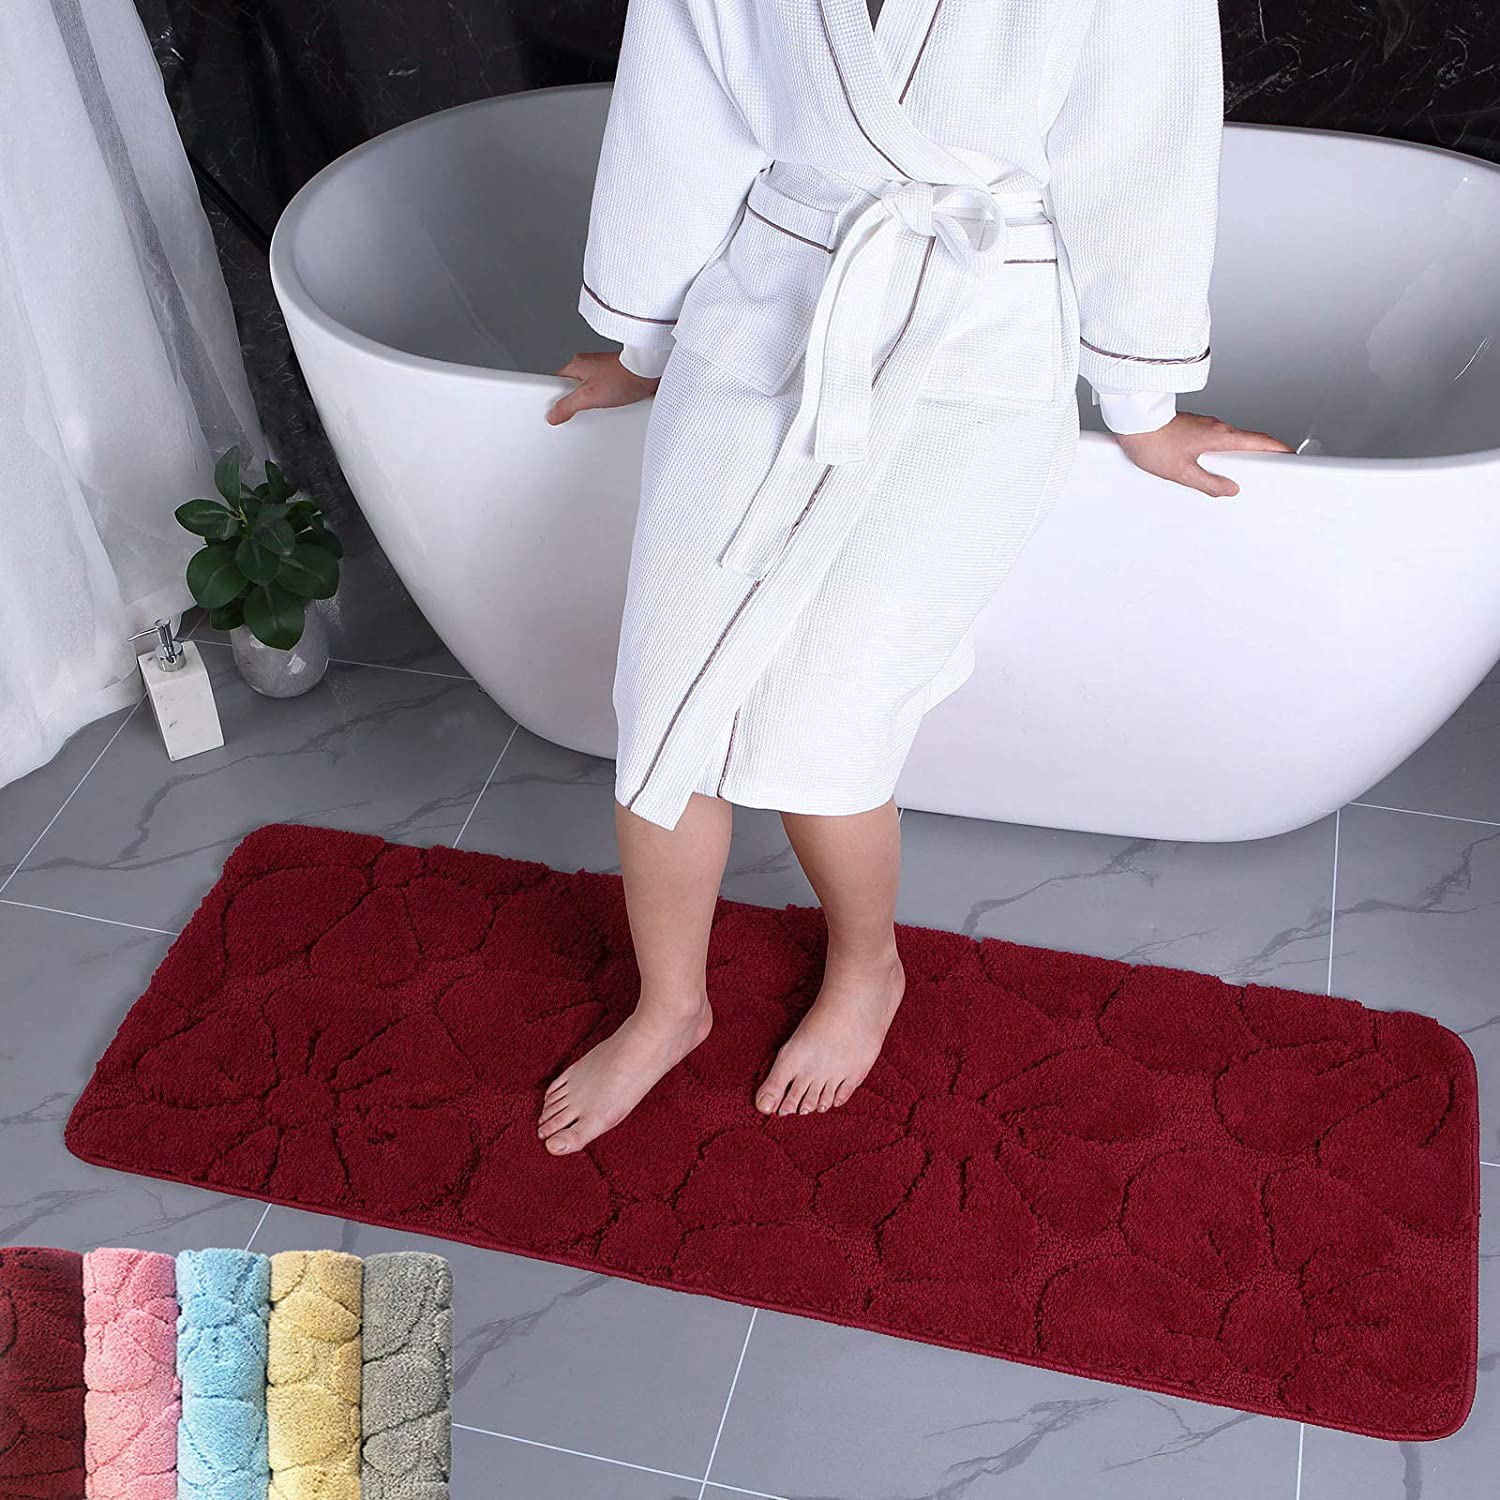 SOCOOL Bath Mat Soft Non Slip Super Water Absorbing Bathroom Mats (Grey  Stone, 24x36),DM3484D 